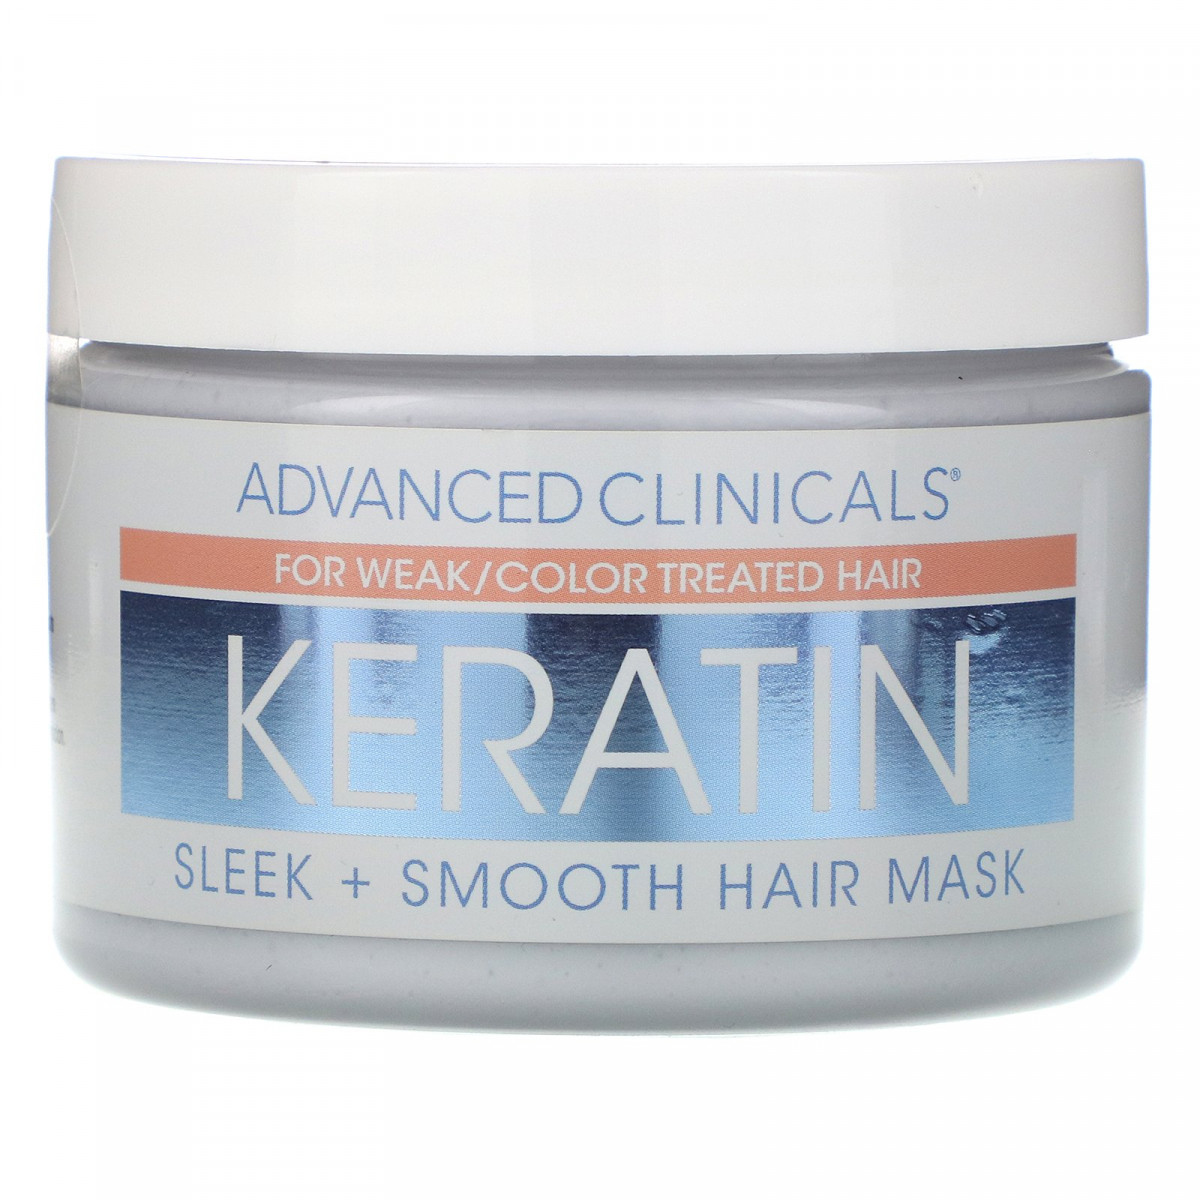 Кератин, маска для гладких волос, Keratin, Sleek + Smooth Hair Mask,  Advanced Clinicals, 340 г, цена 526.50 грн - Prom.ua (ID#1371251577)